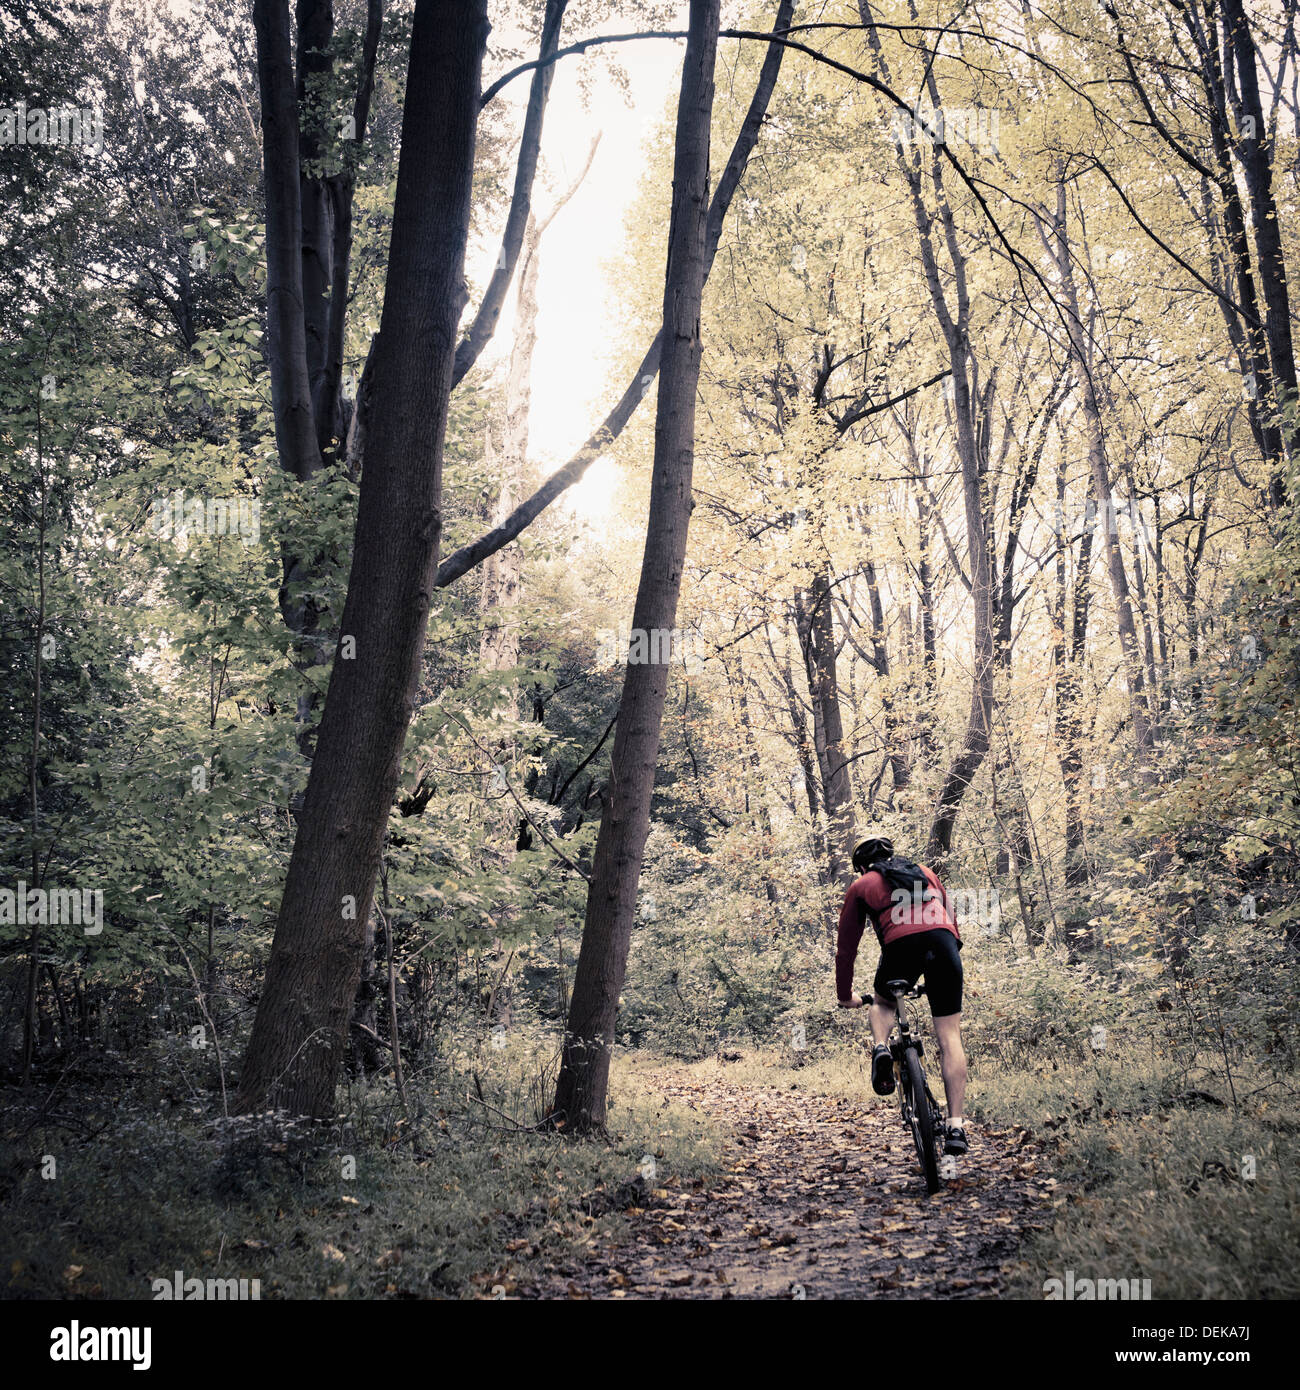 Caucasian man riding mountain bike in forest Stock Photo